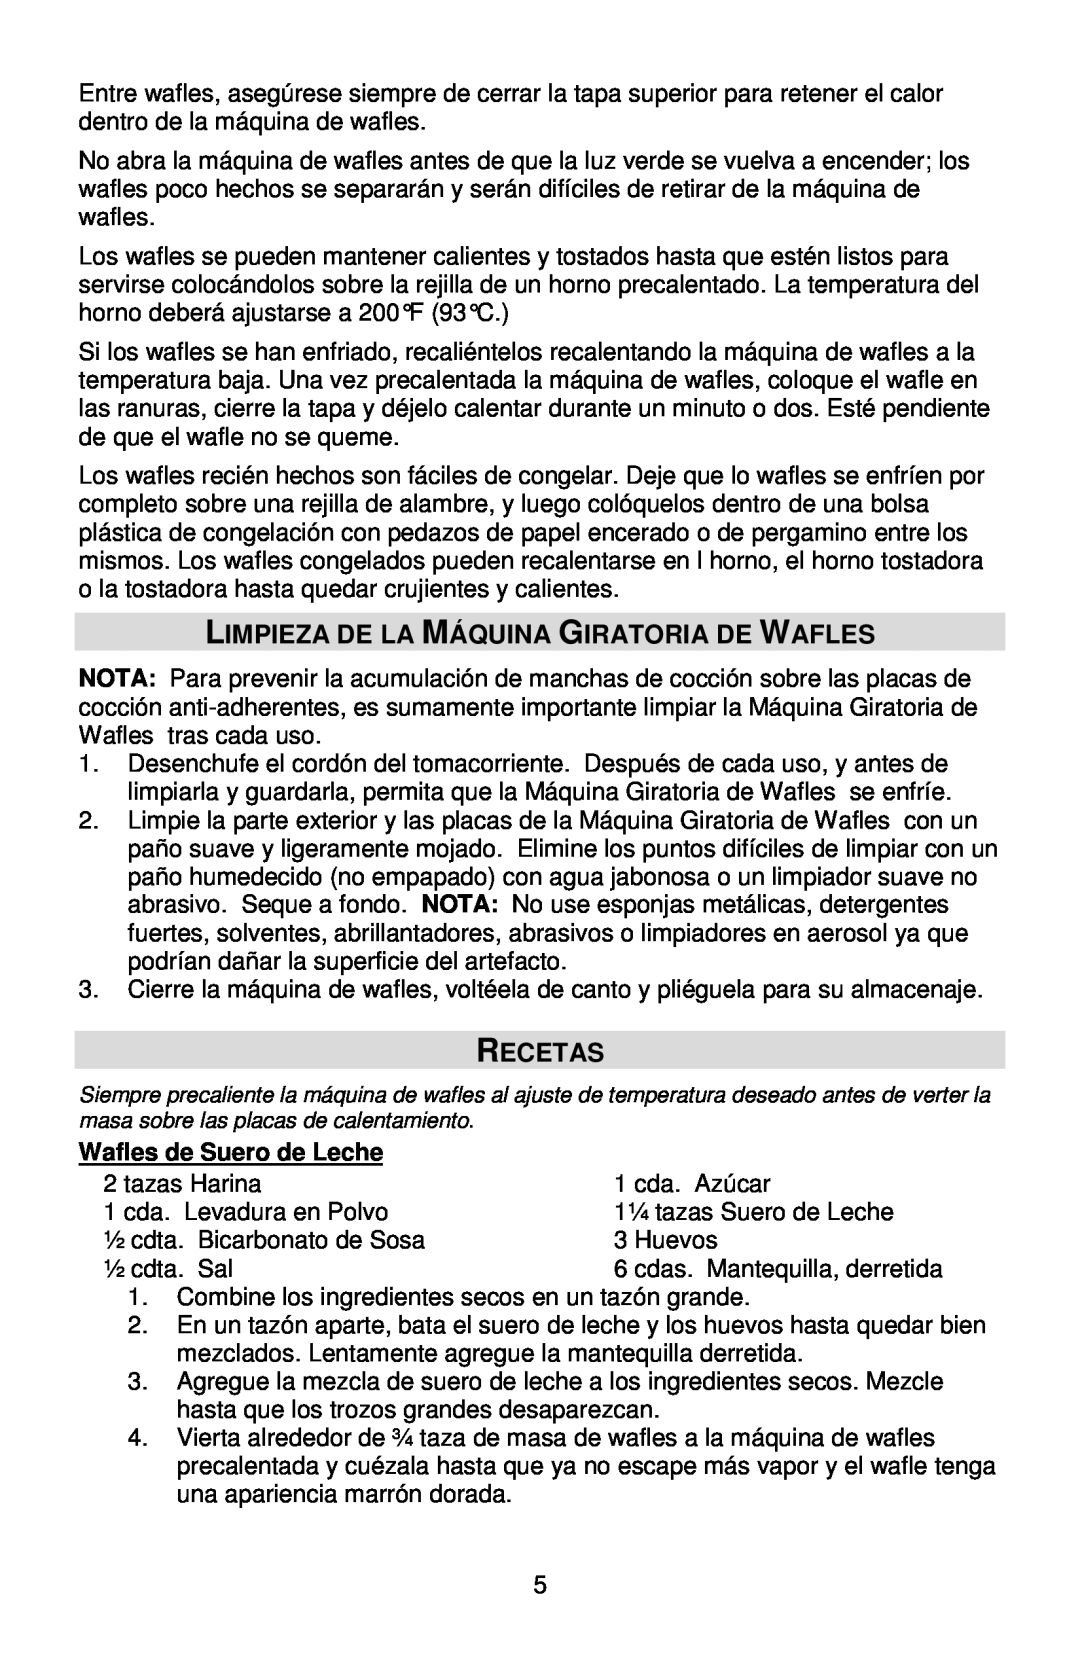 West Bend 6201 instruction manual Limpieza De La Máquina Giratoria De Wafles, Recetas, Wafles de Suero de Leche 